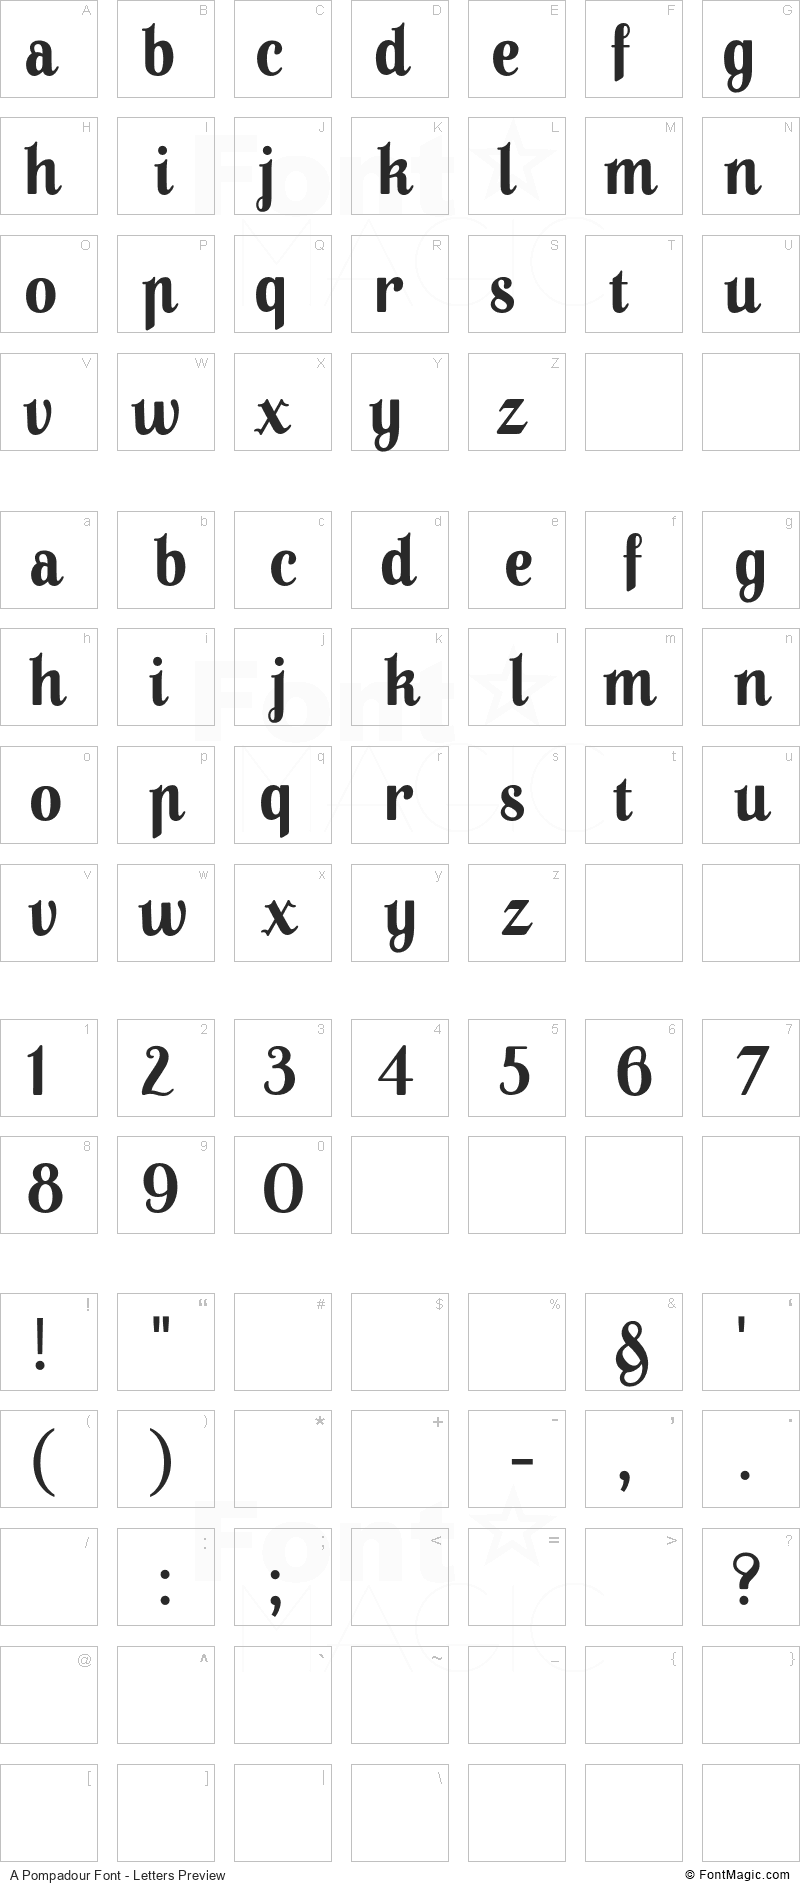 A Pompadour Font - All Latters Preview Chart